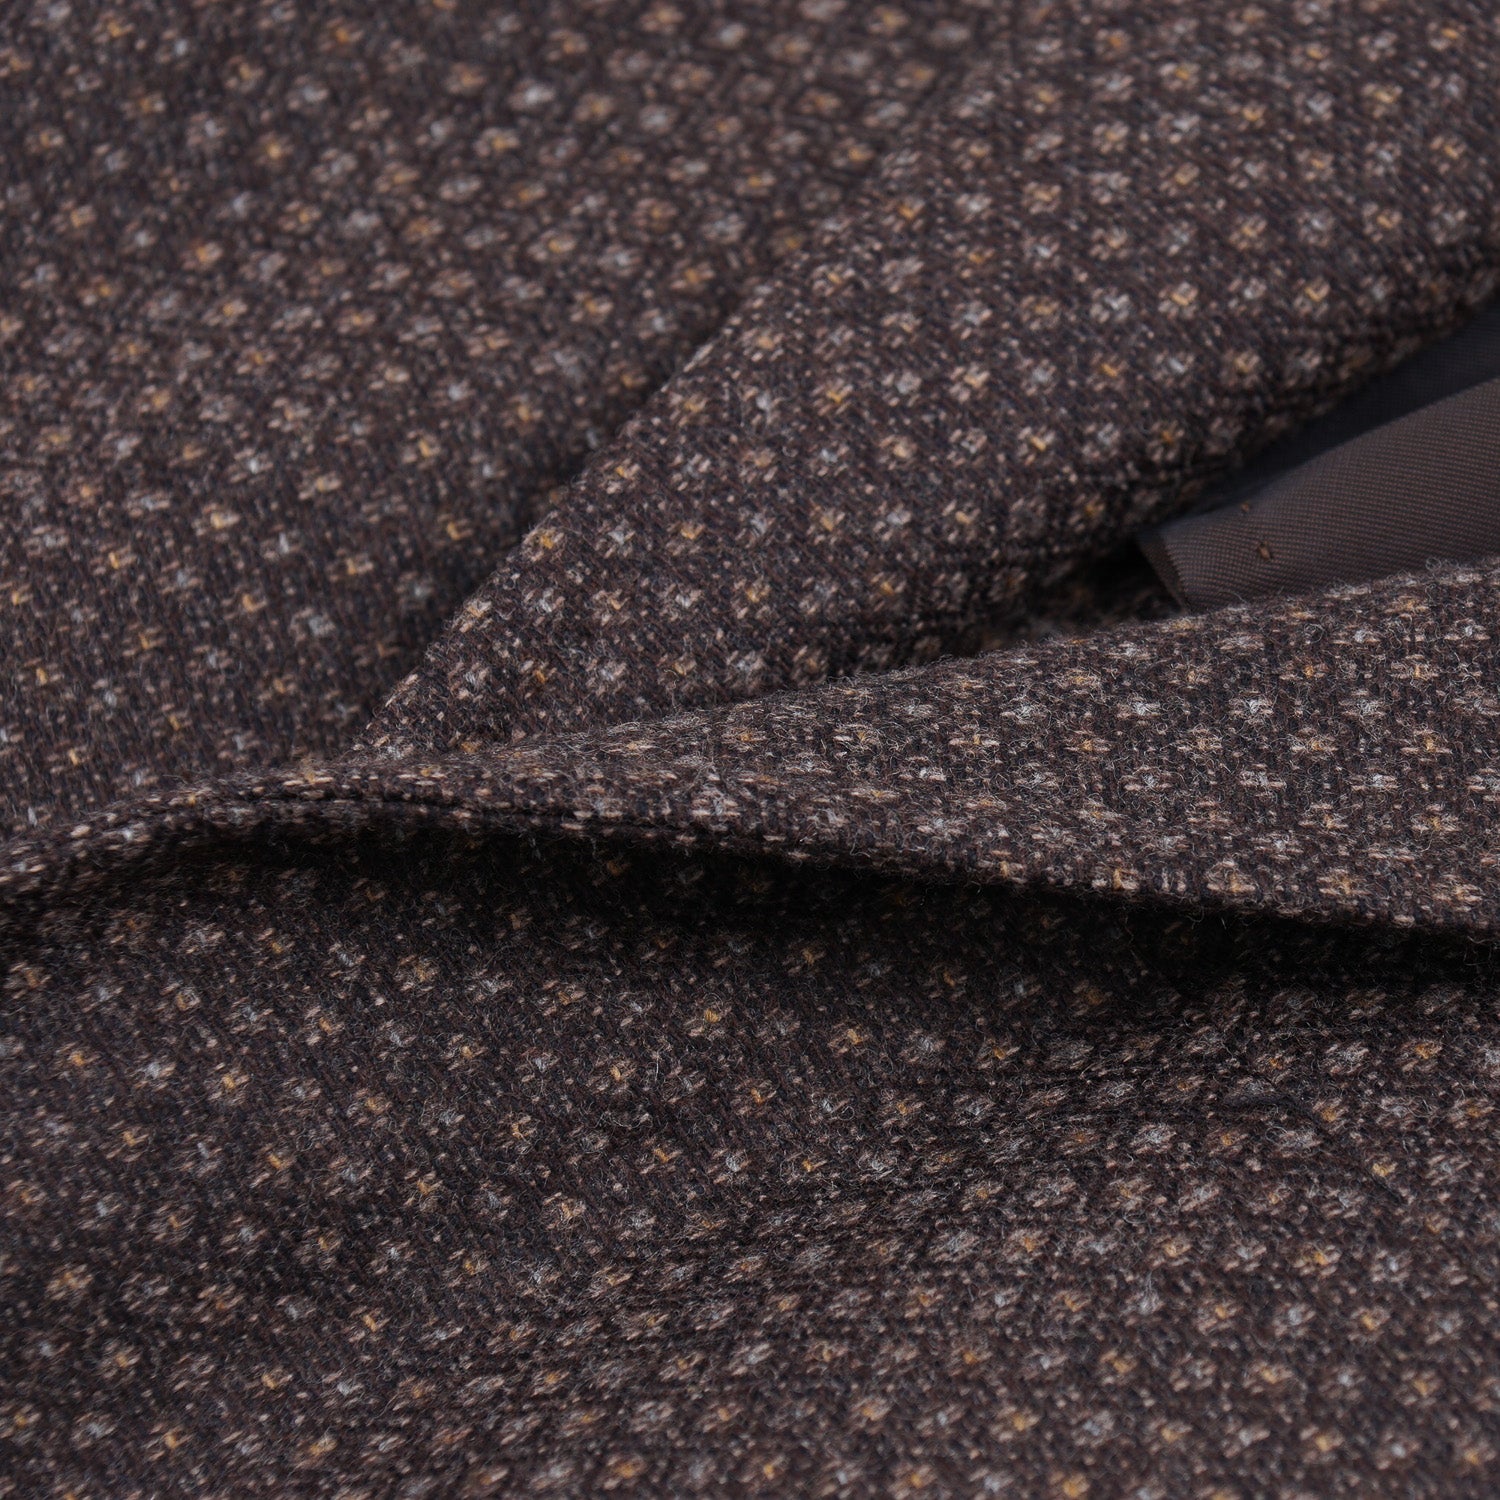 Isaia Slim Fit Wool-Cashmere Sport Coat - Top Shelf Apparel